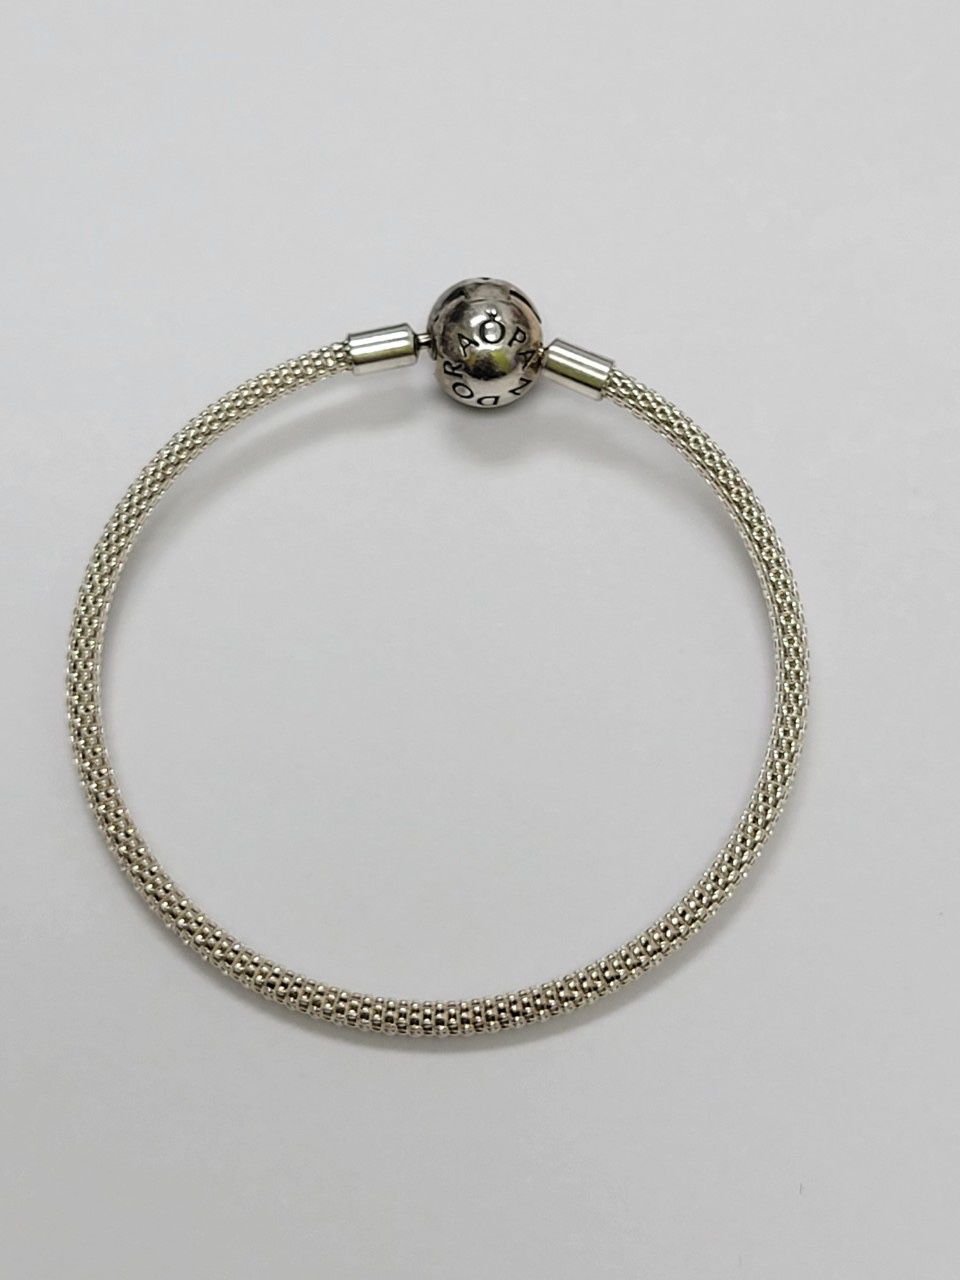 Pandora Moments Mesh Bracelet - Sterling Silver Charm Bracelet for Women - Compatible Moments Charms